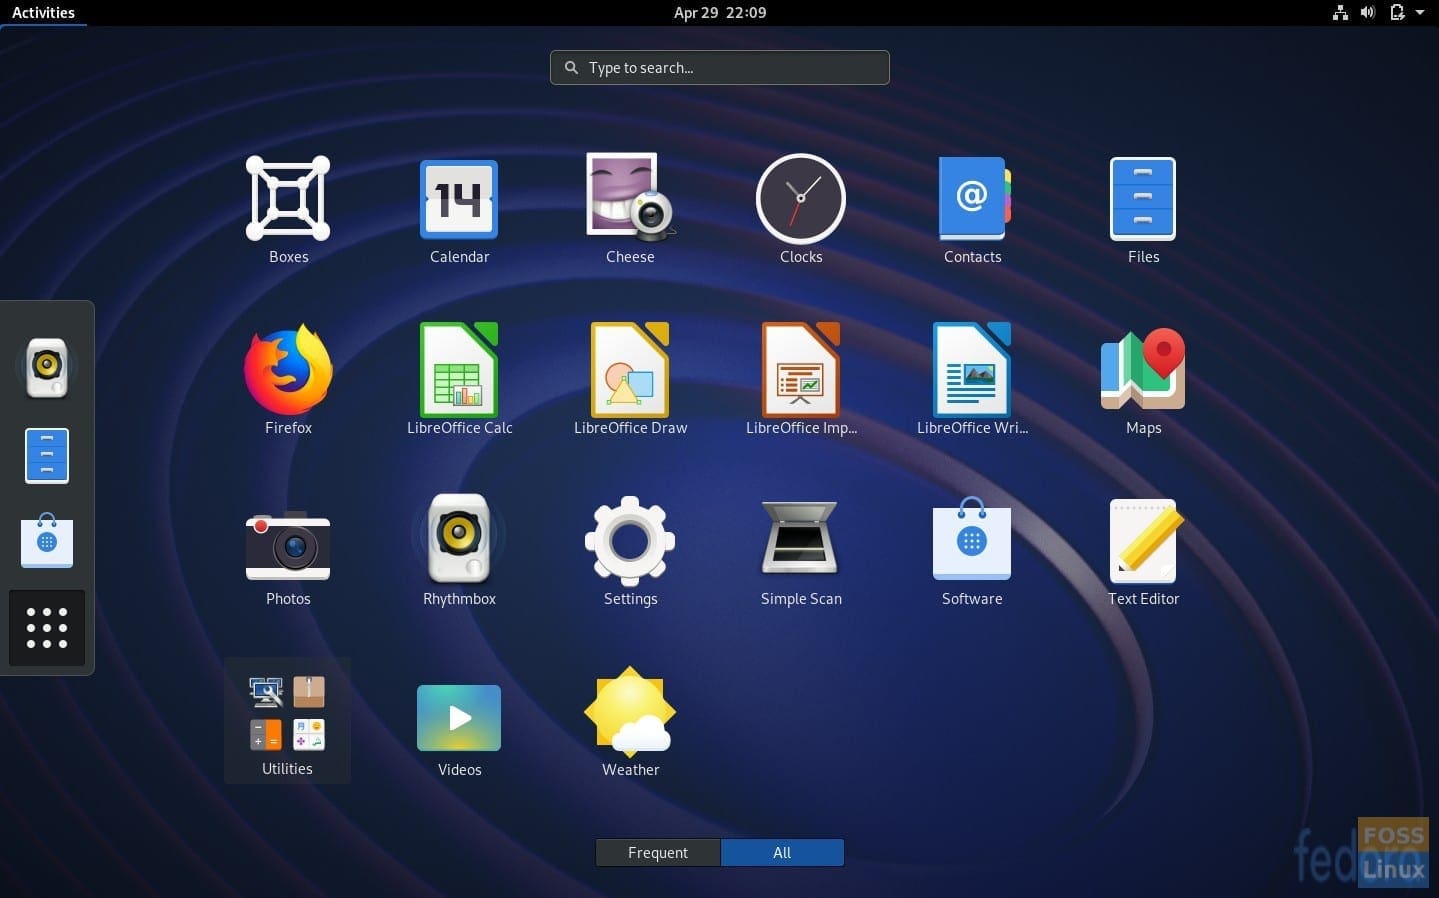 Fedora 20 Workstation on GNOME 3.32